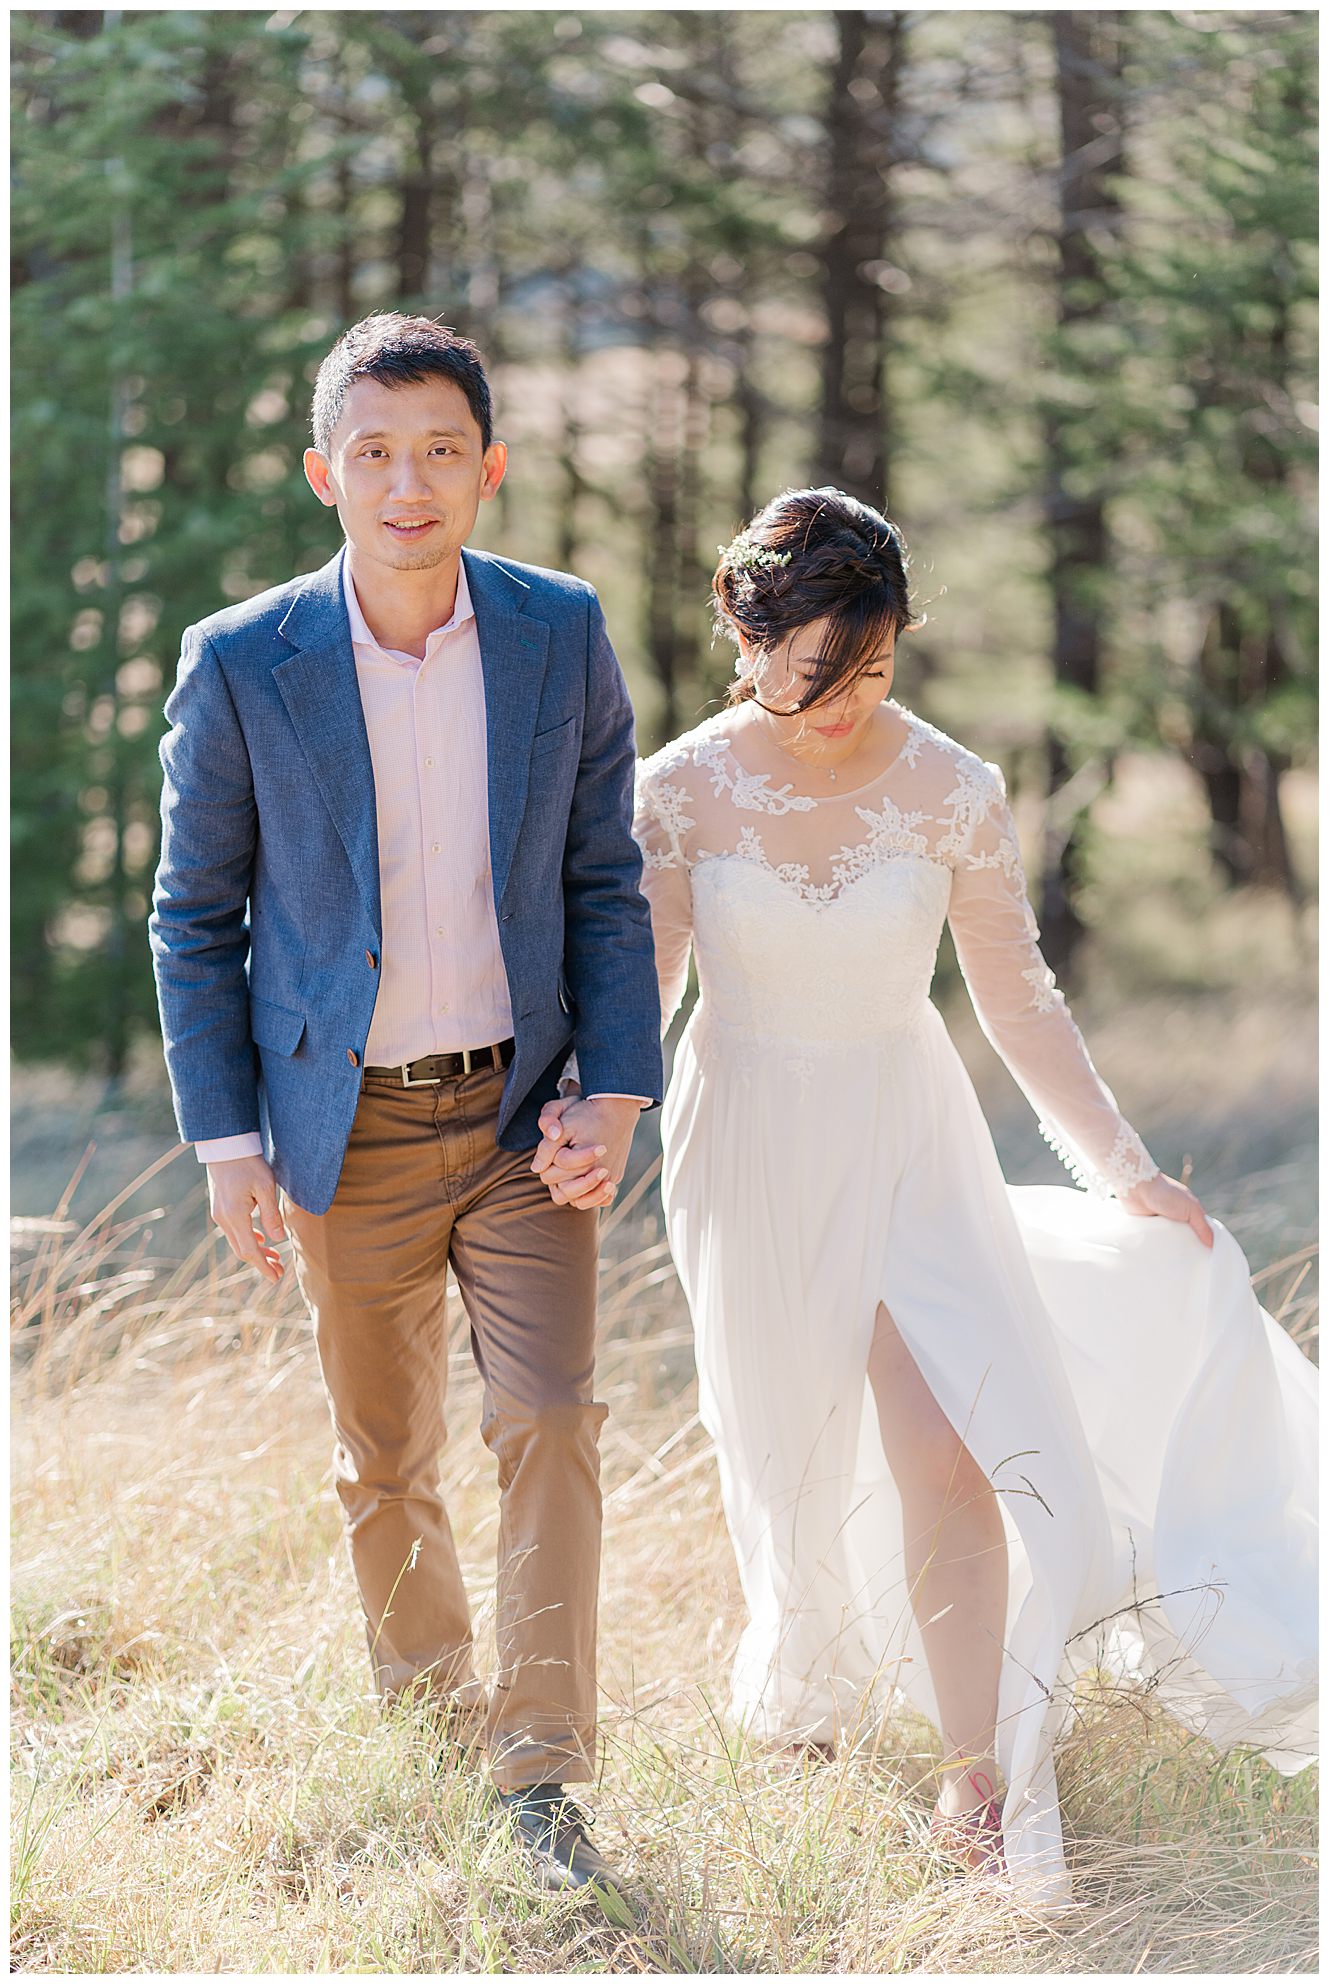 Best wedding photographer Canberra